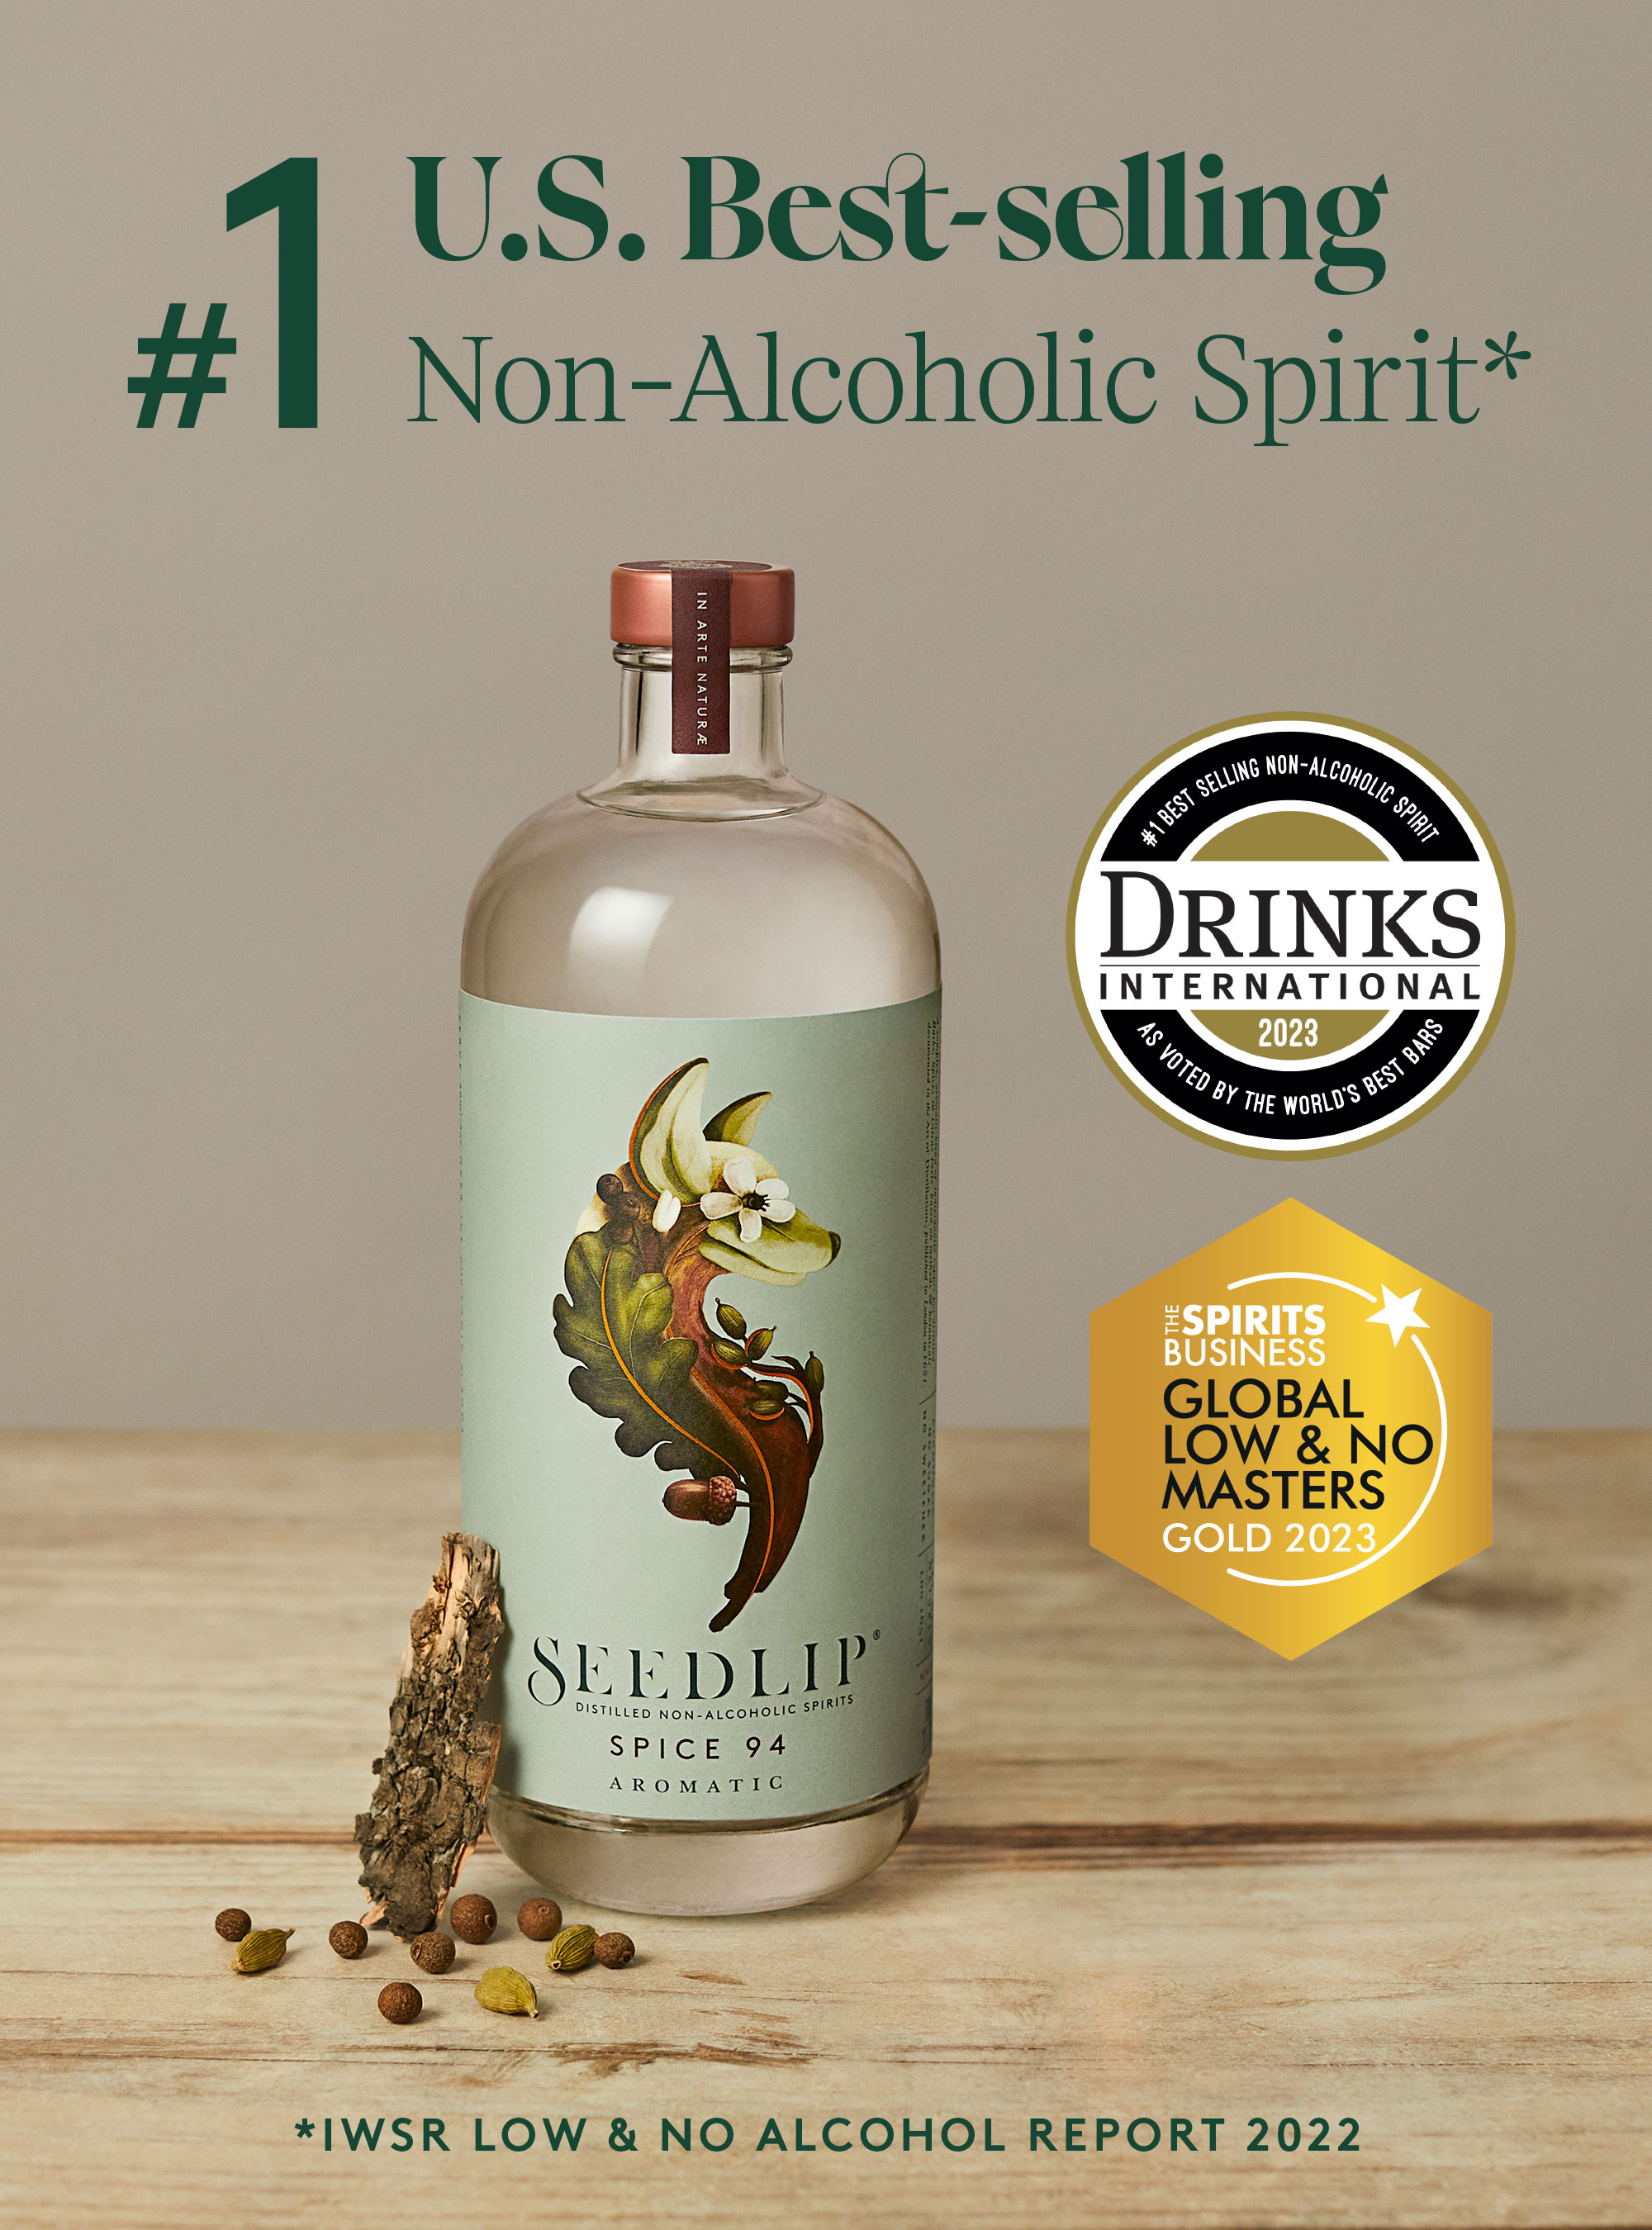 Spice 94, Non Alcoholic Spirit